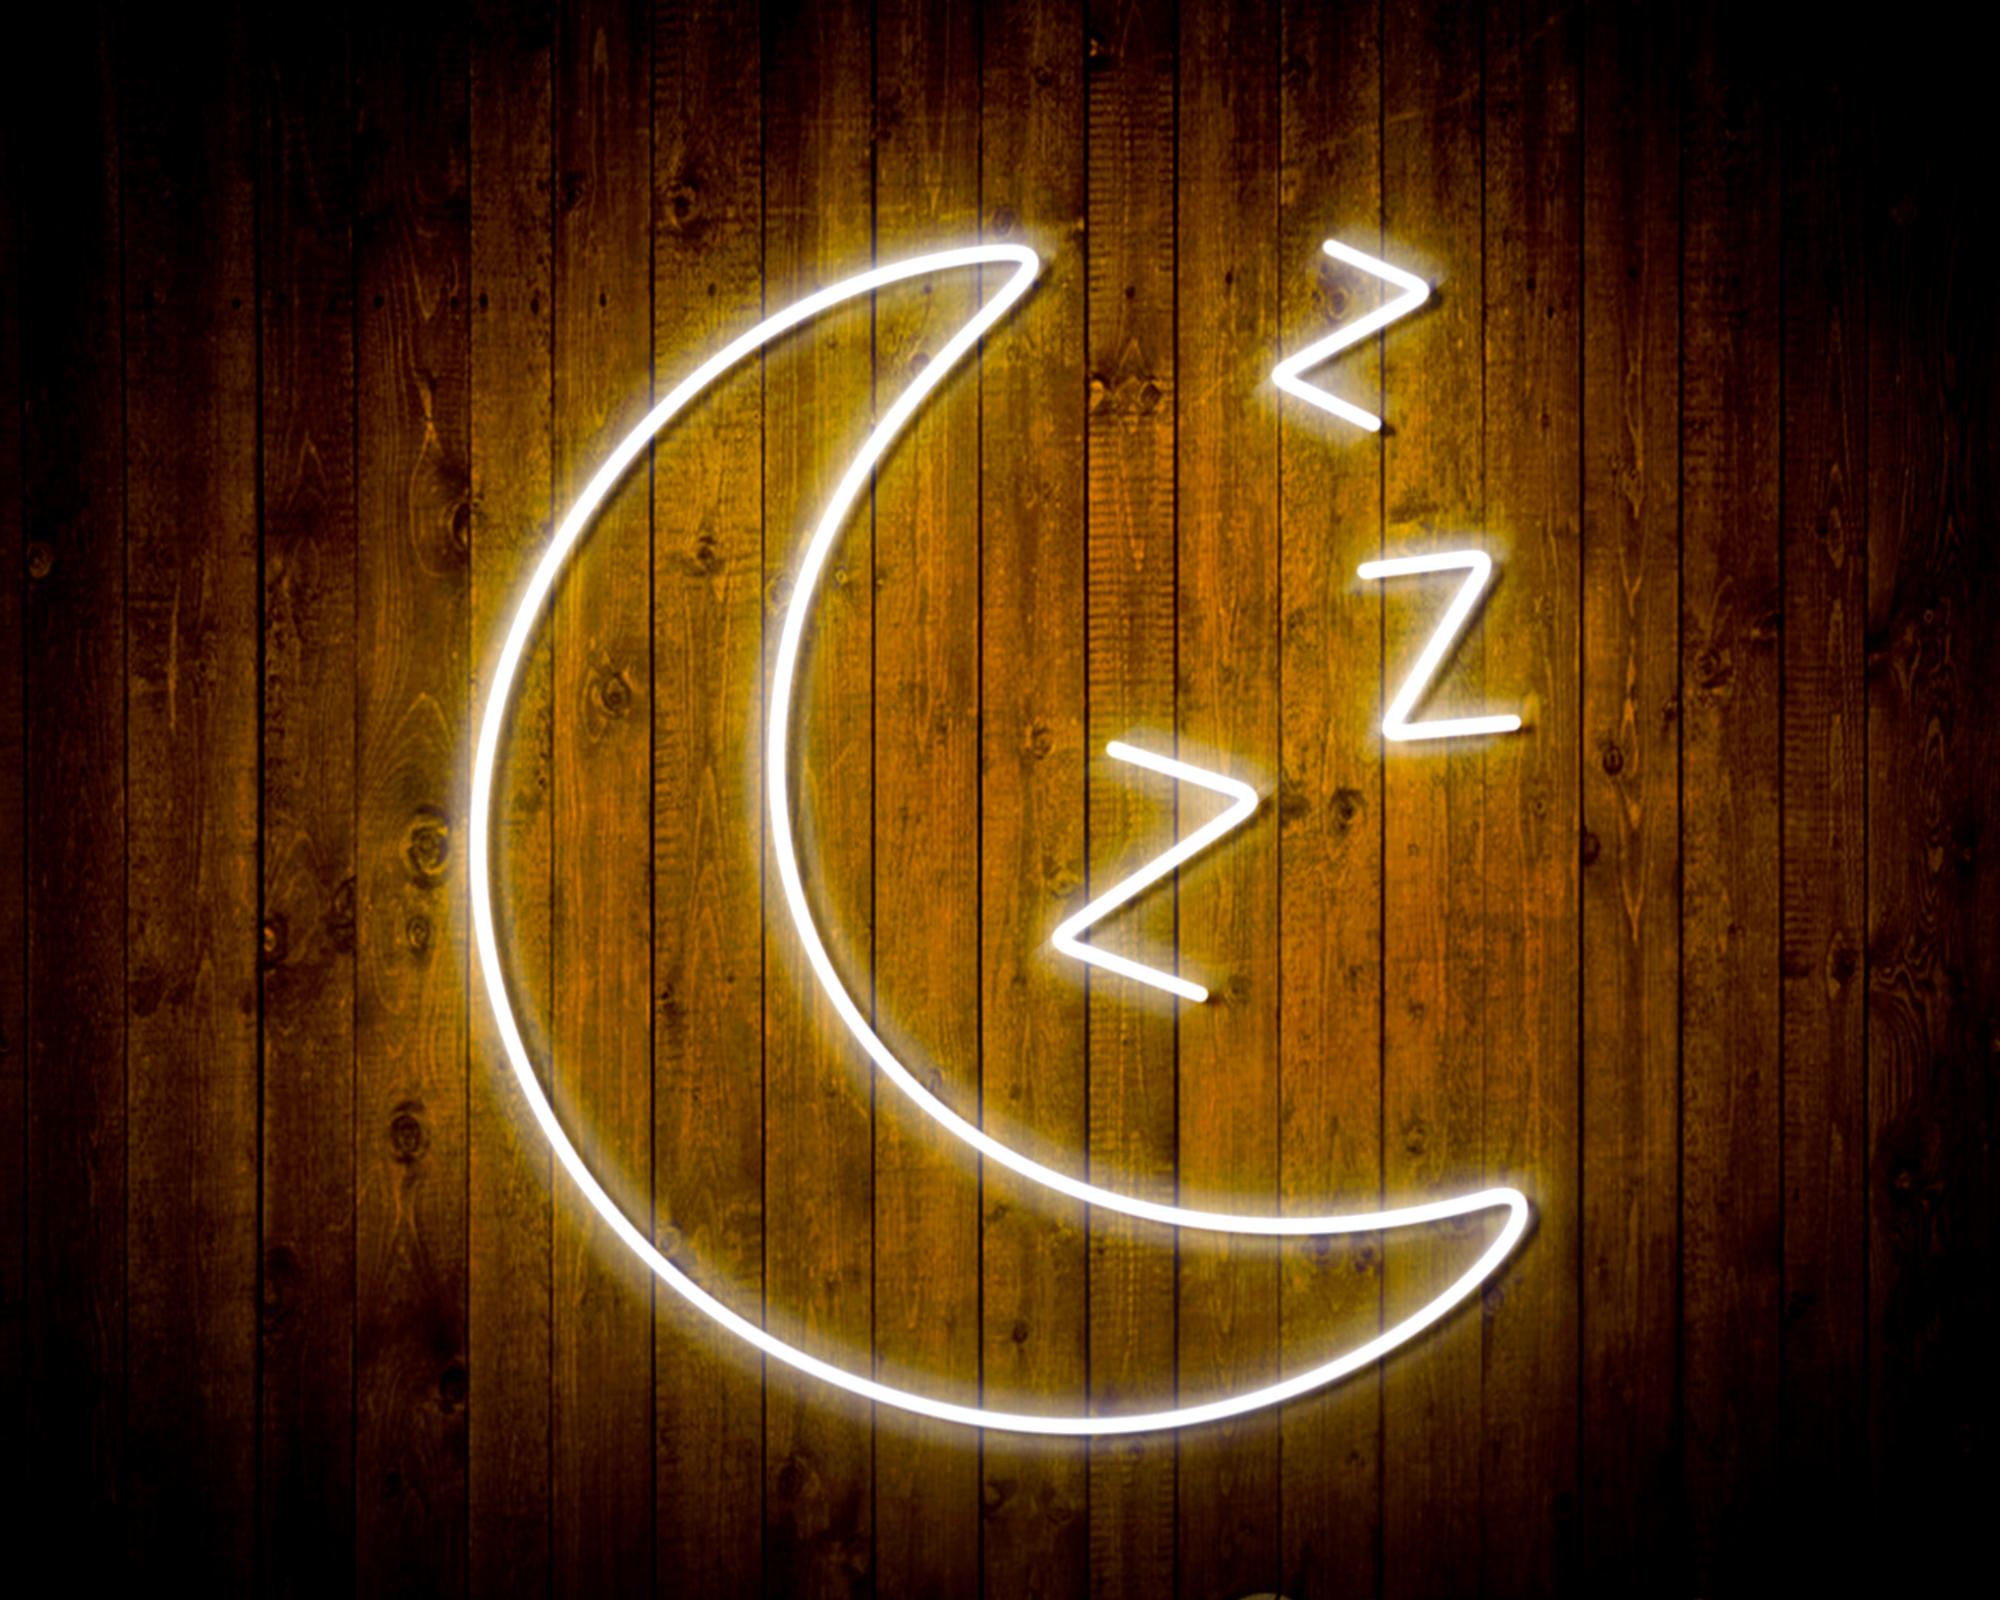 Sleepy Moon LED Neon Sign Wall Light